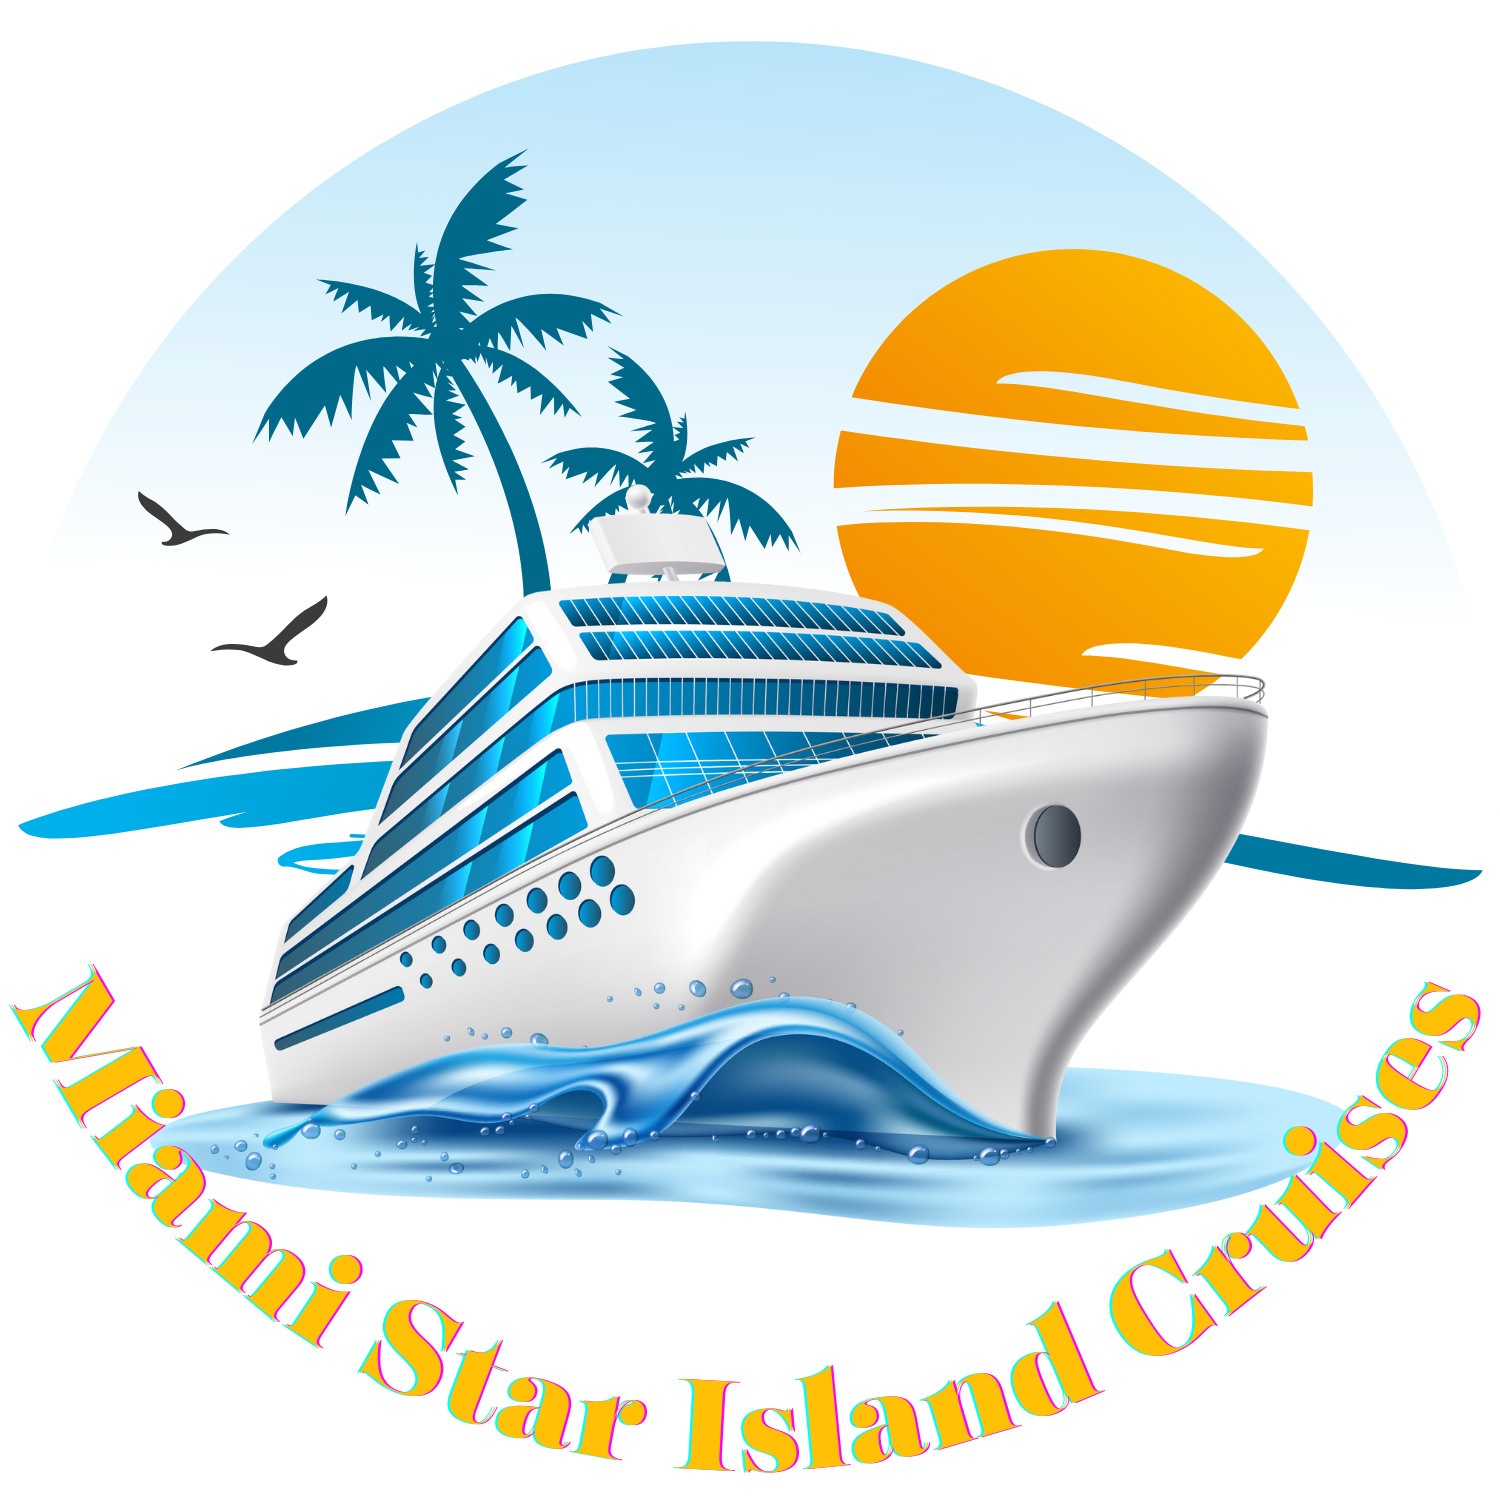 Miami Star Island Cruises